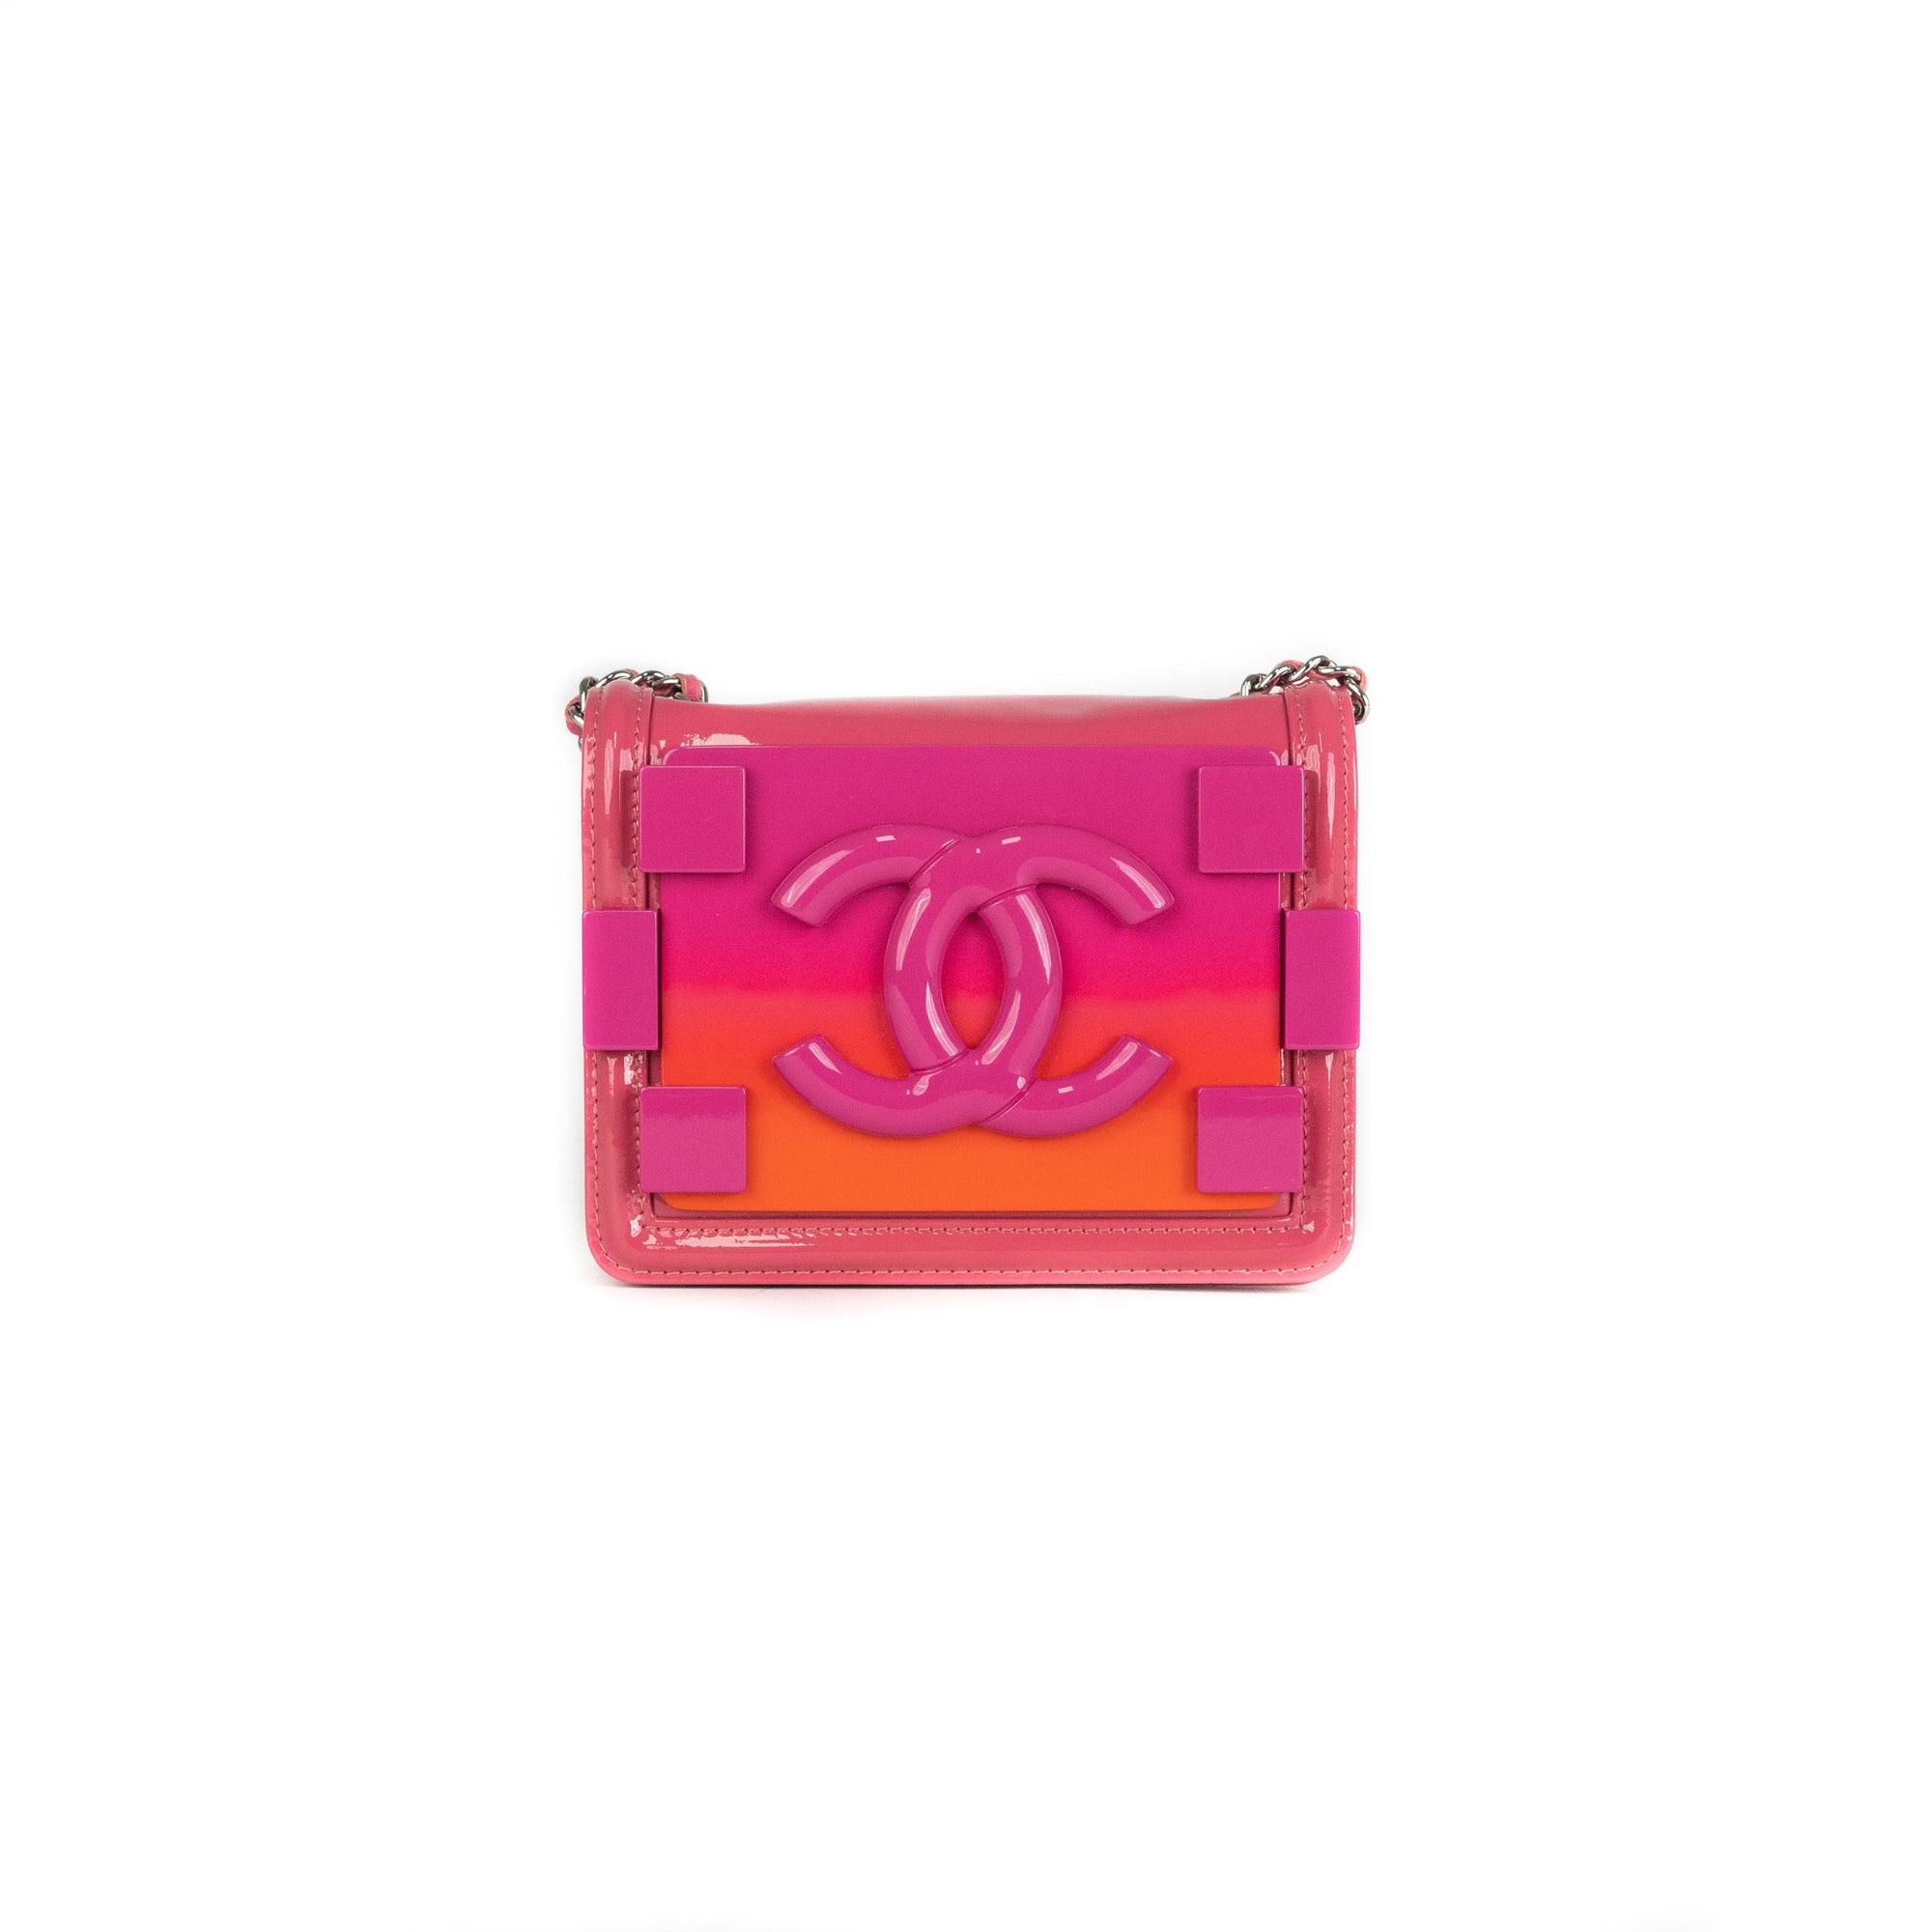 Chanel Brick Bag Pink - THE PURSE AFFAIR